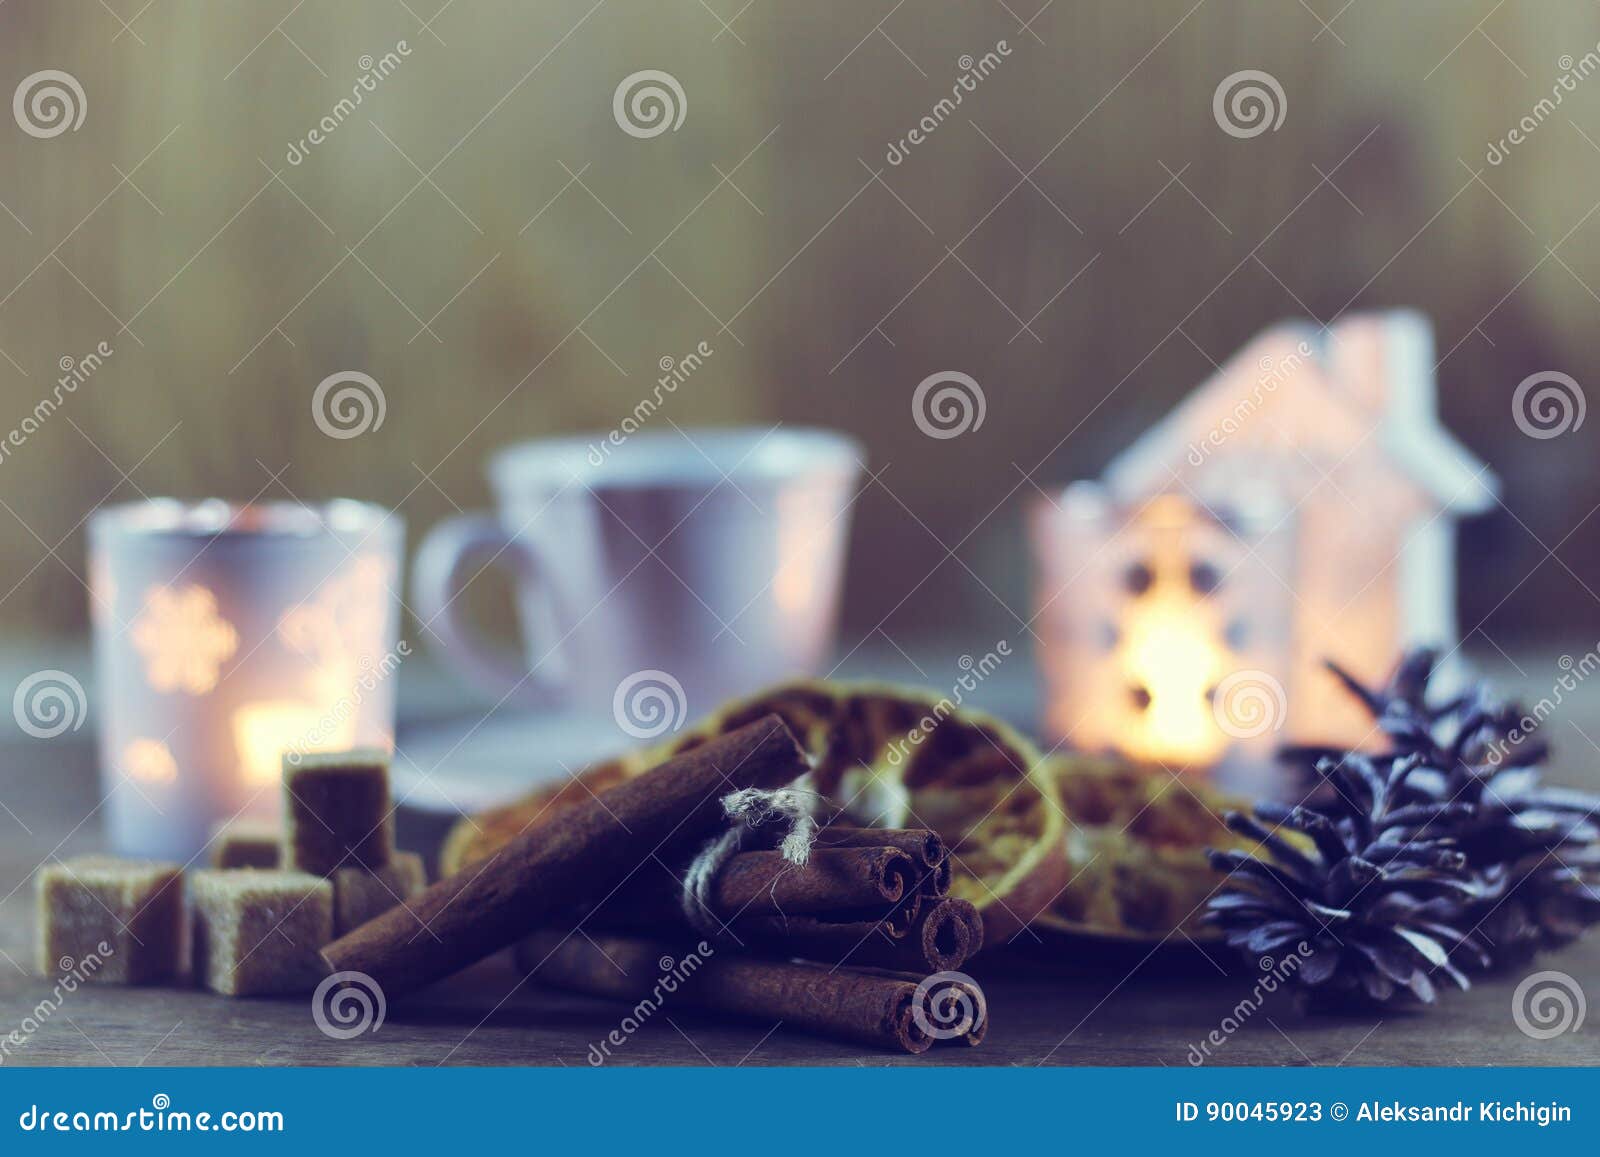 Cup of Orange Cinnamon Sugar Stock Image - Image of holiday, cinnamon ...